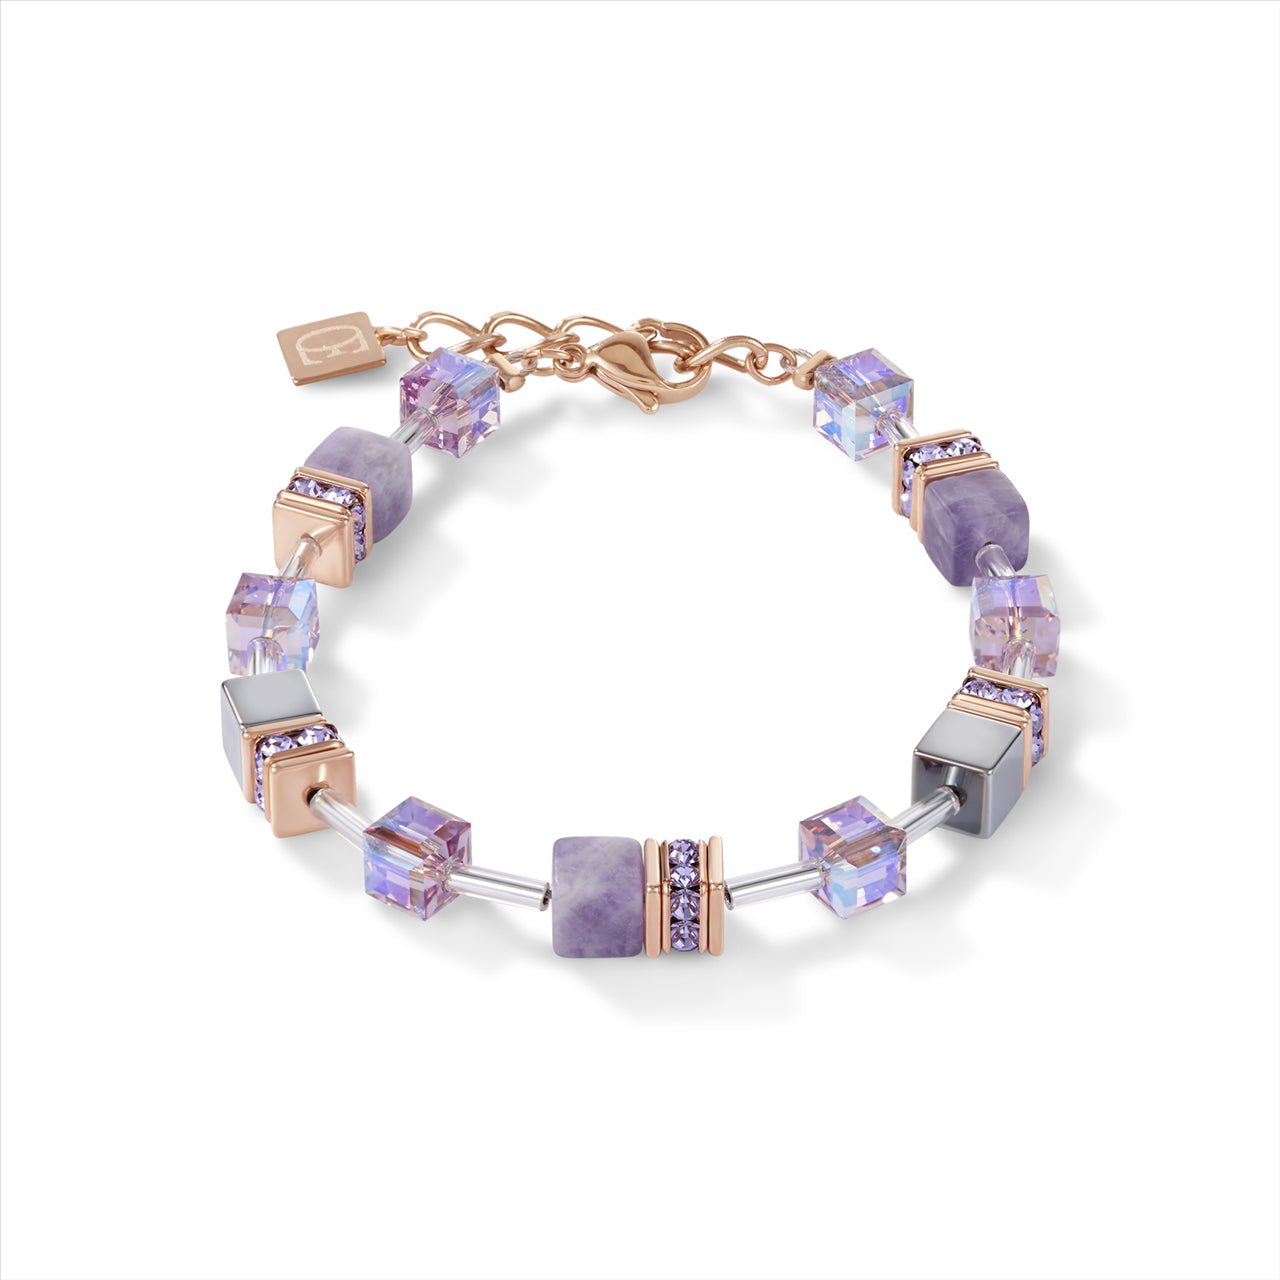 Bracelet - CDL - Natural selection-bracelet geo-cube rose gold platinum st/stl with Amethyst/ rhinestone, oxide titanium haematite & Swarovski crrystals